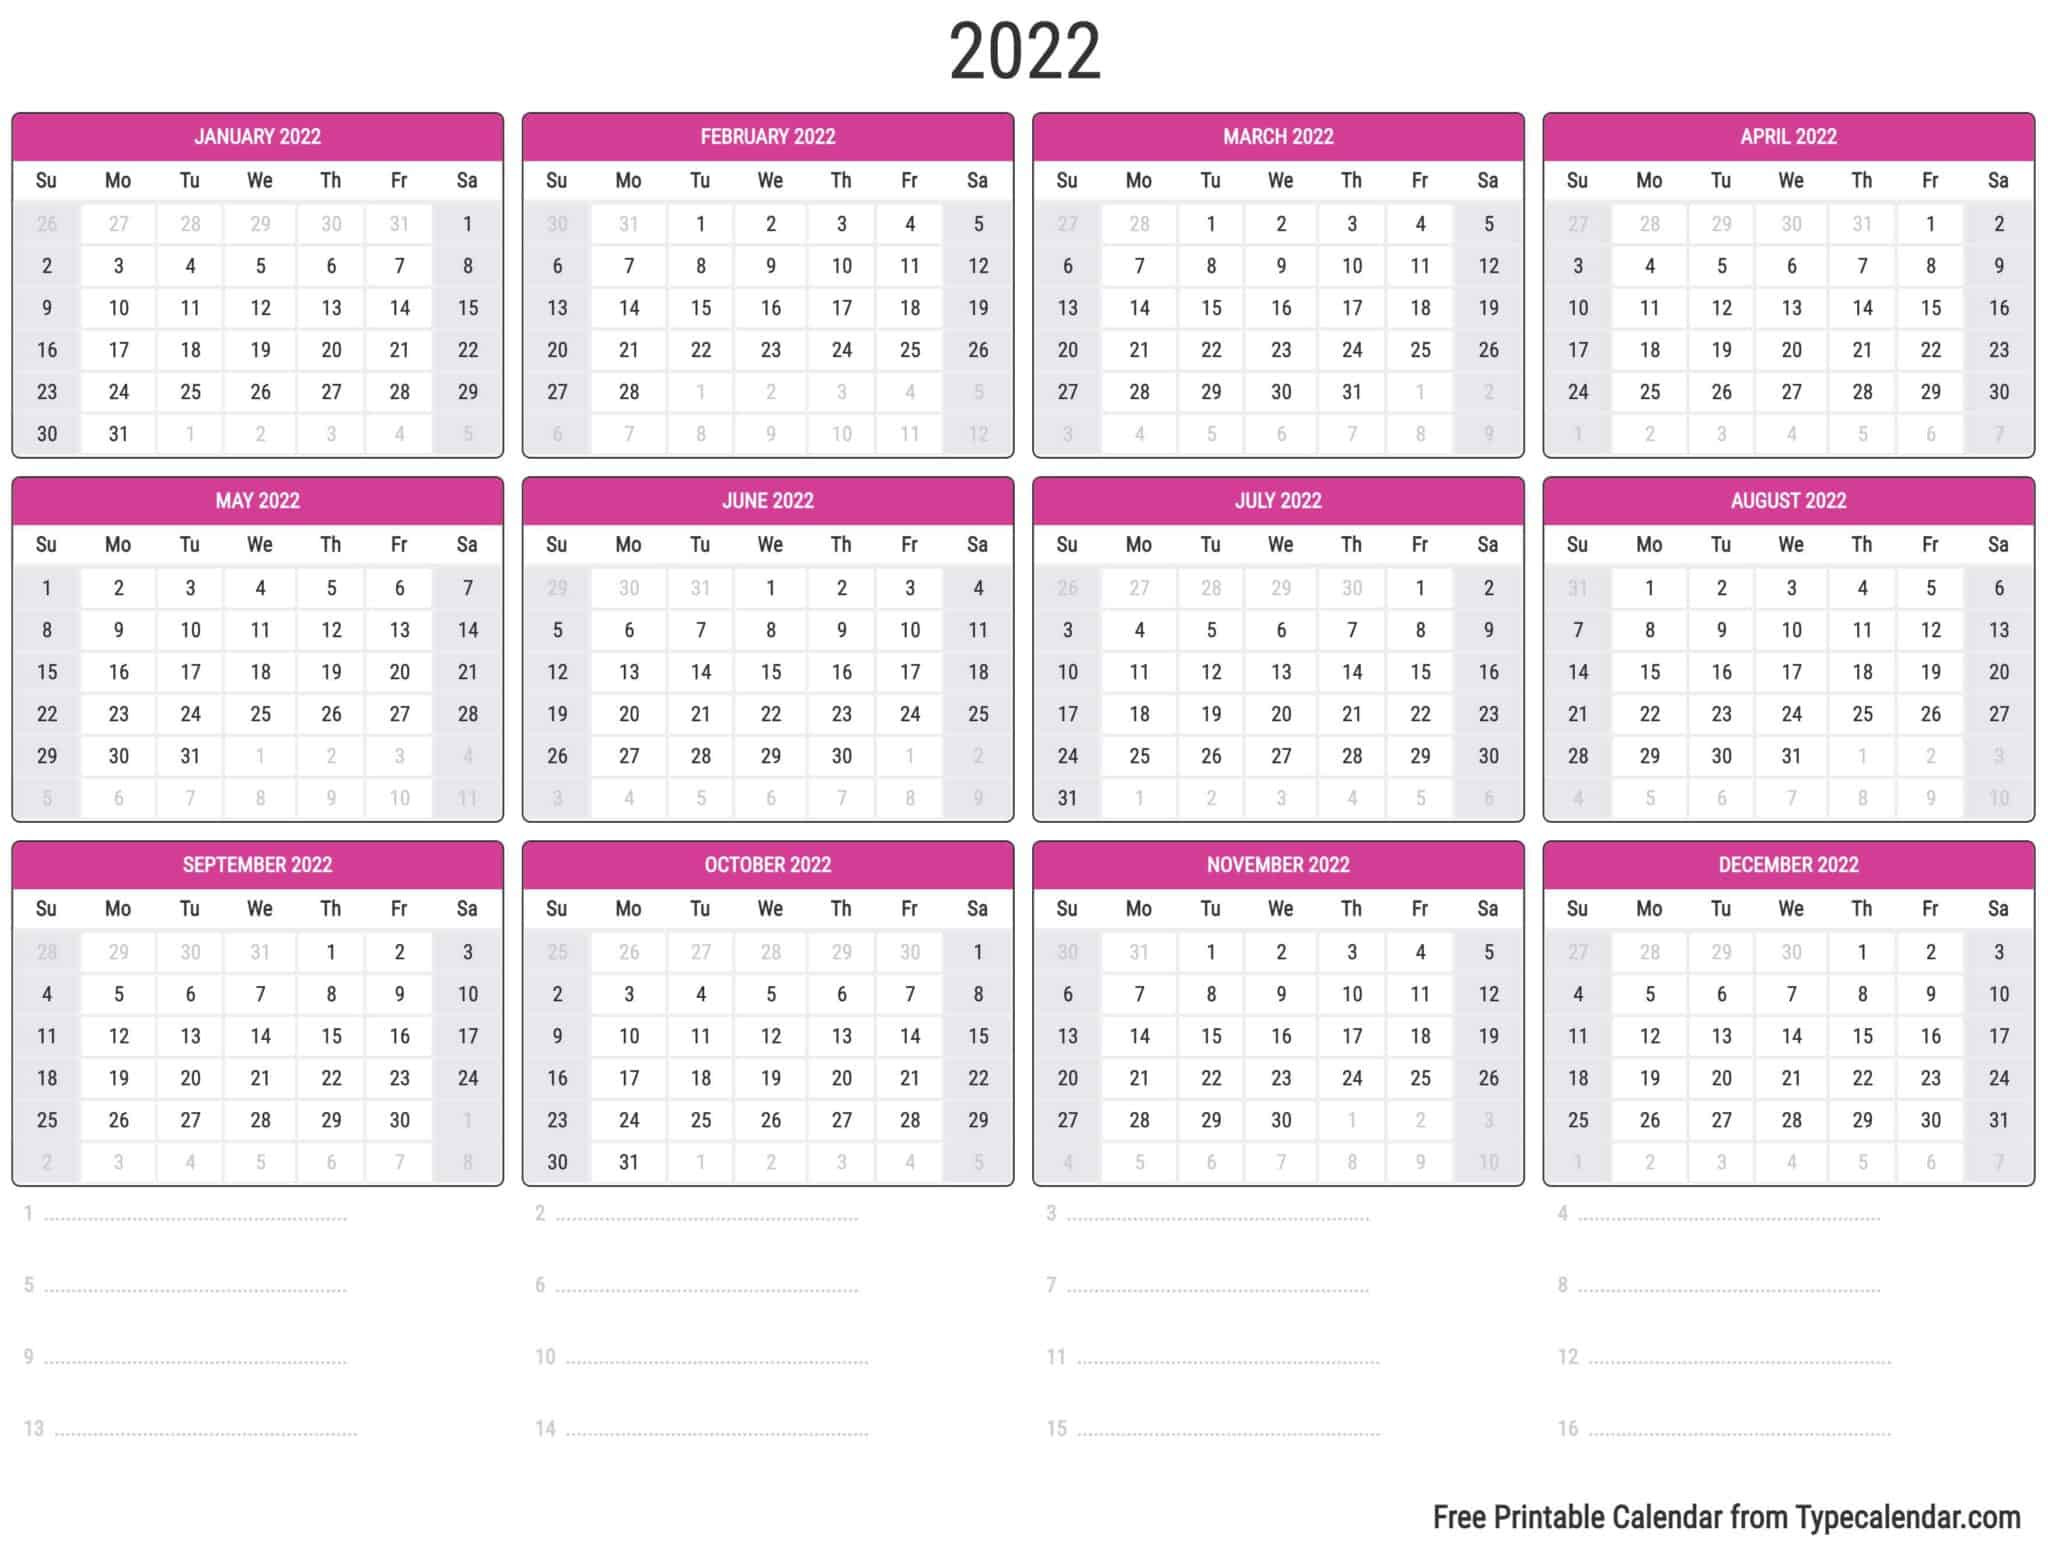 Free Printable Year 2022 Calendar | Type Calendar  Printable Calendar 2022 Planner